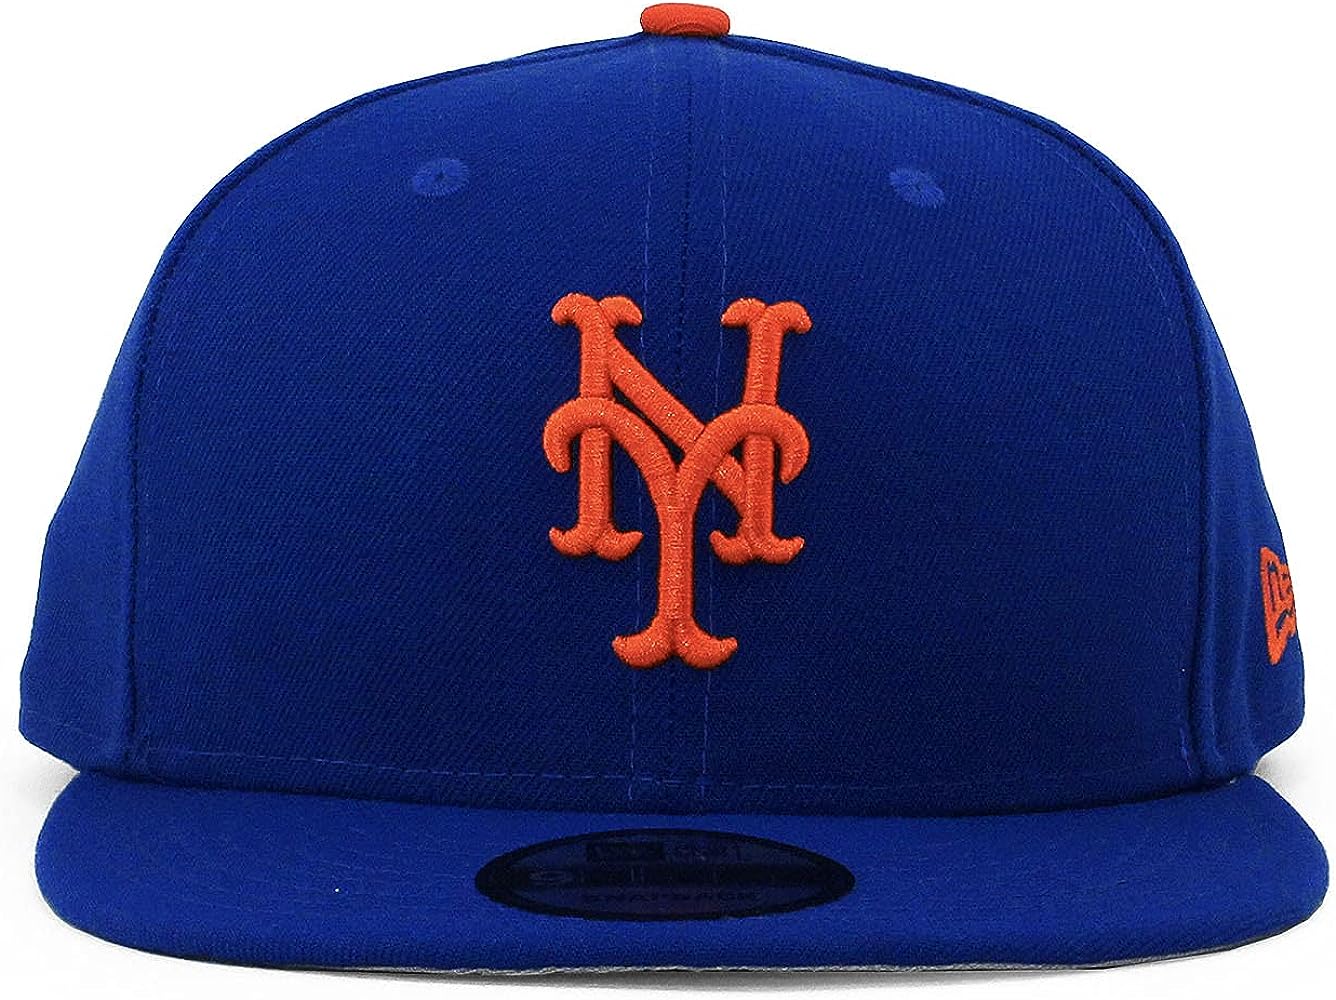 New era fifty mlb new york mets basic royal blue snapback hat one size sports outdoors